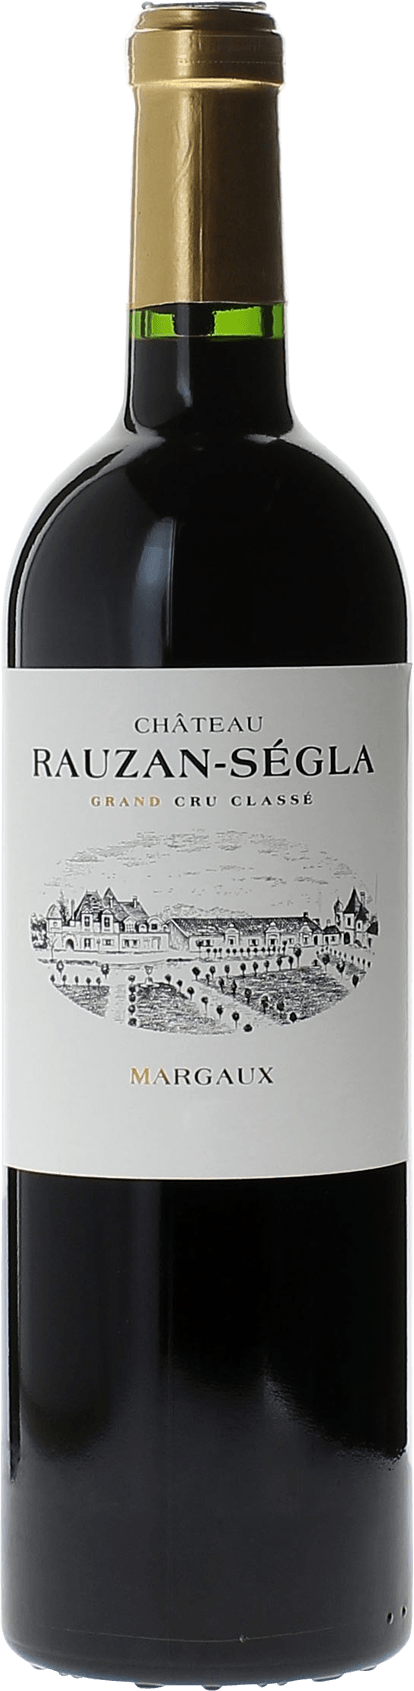 Rauzan-segla 1990 2me Grand cru class Margaux, Bordeaux rouge